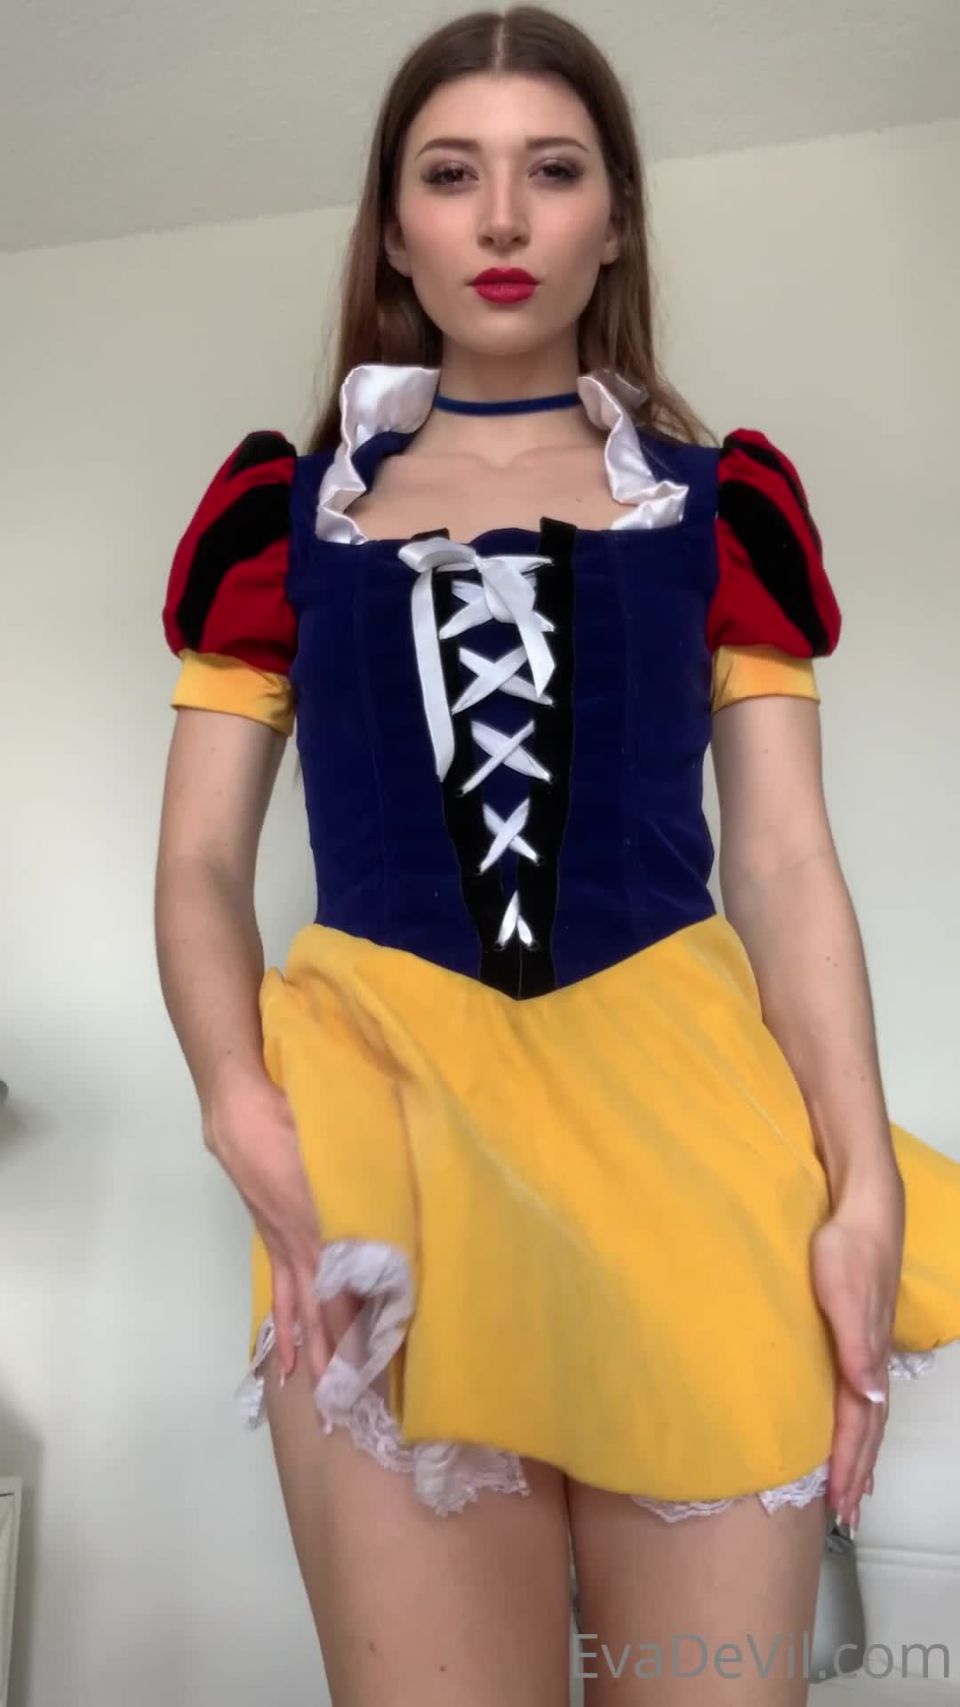 Eva de Vil () Video more of the snow white costume november 30-11-2020